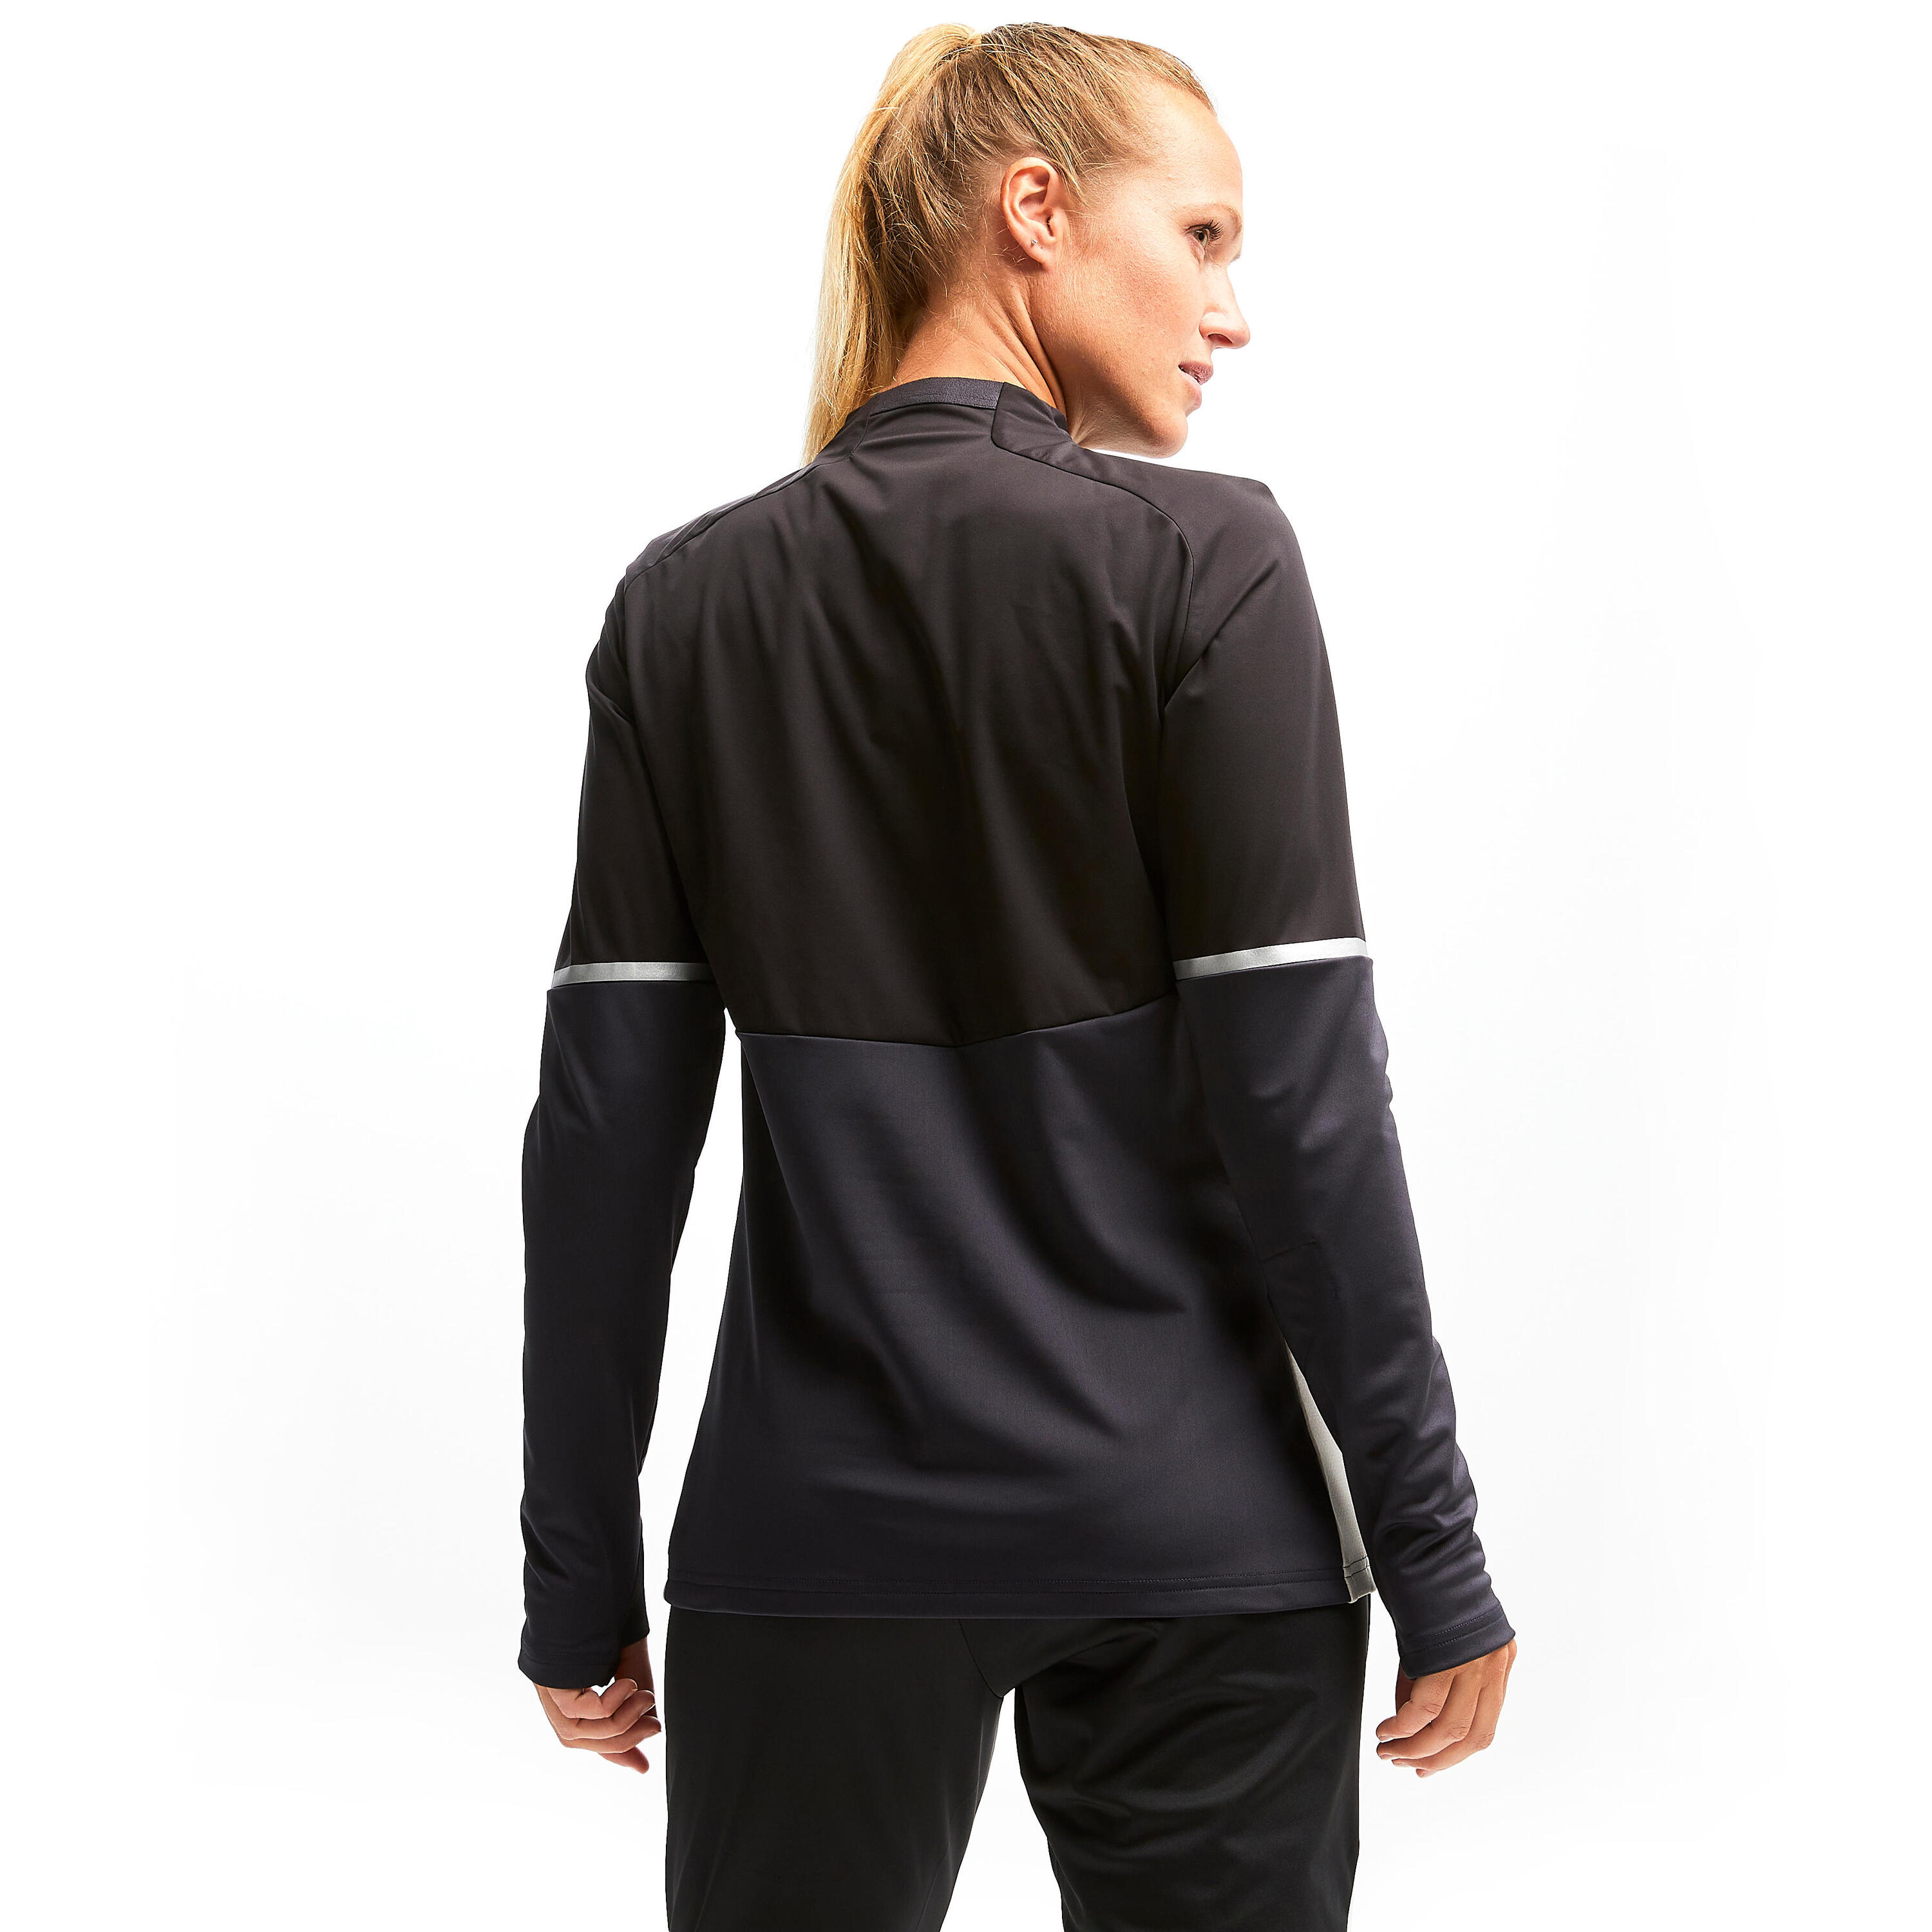 T500 Women's Football Training Sweatshirt - Black 4/10